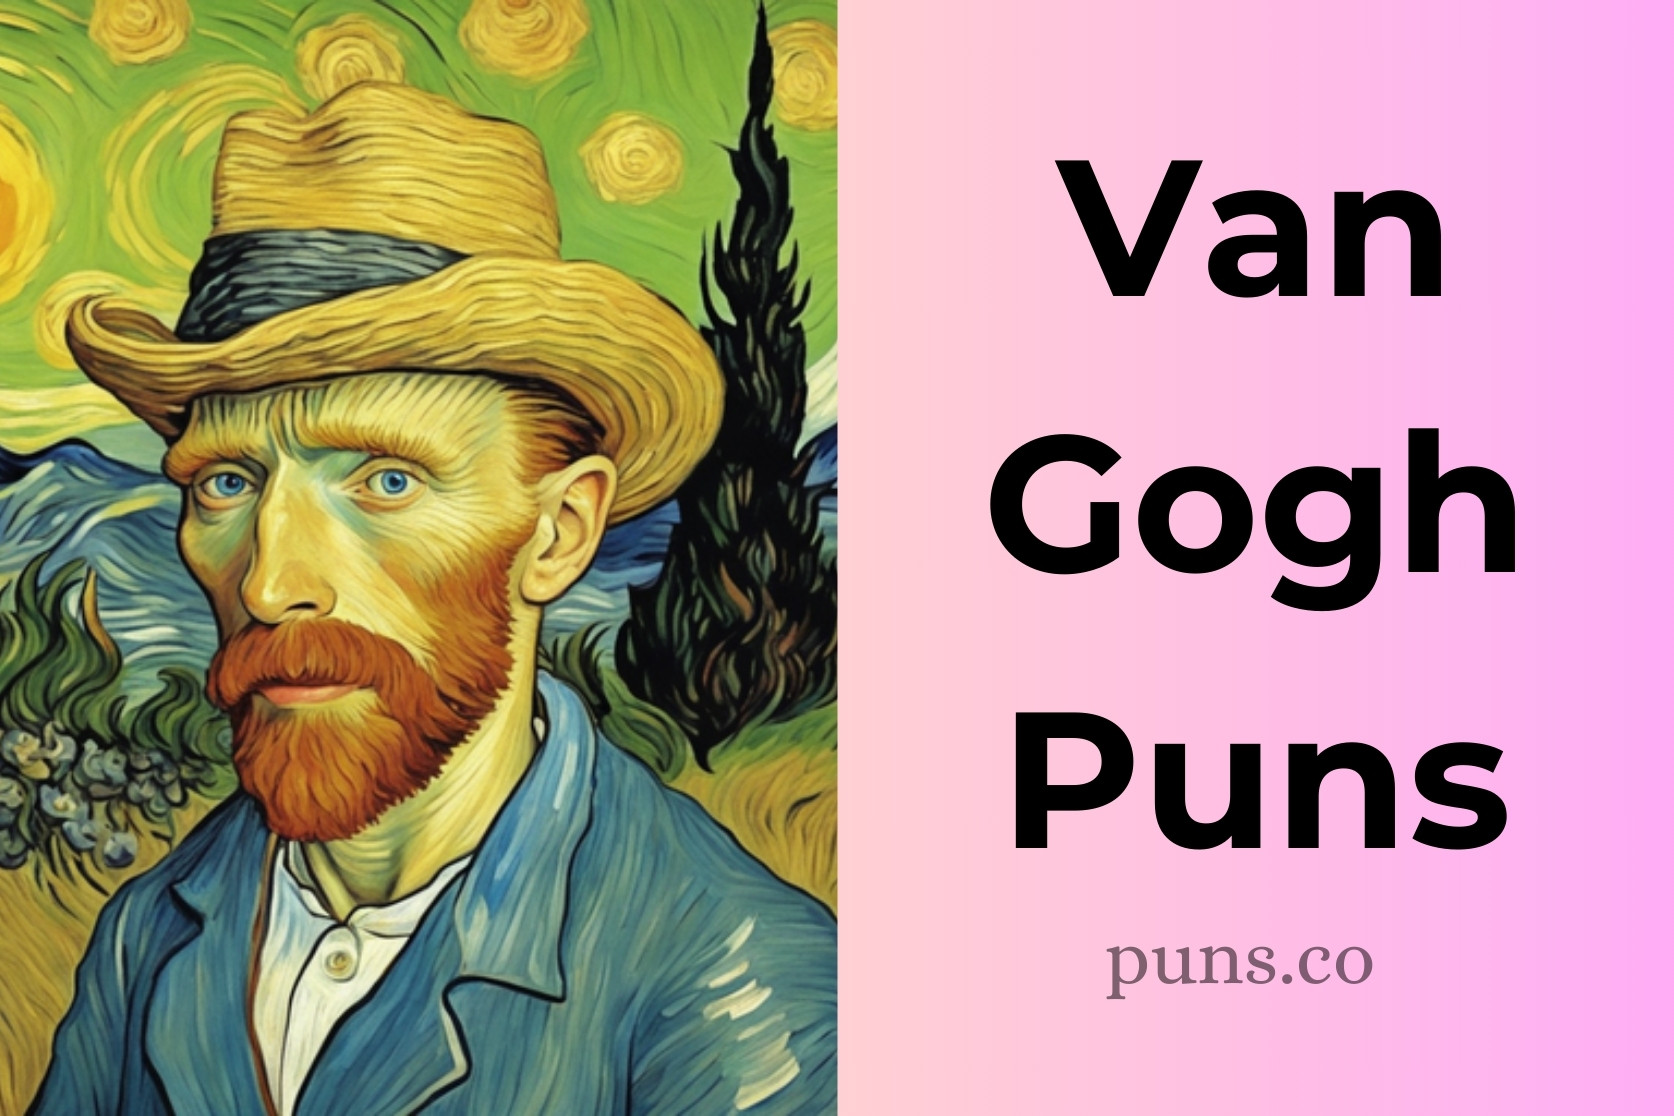 Van Gogh Puns